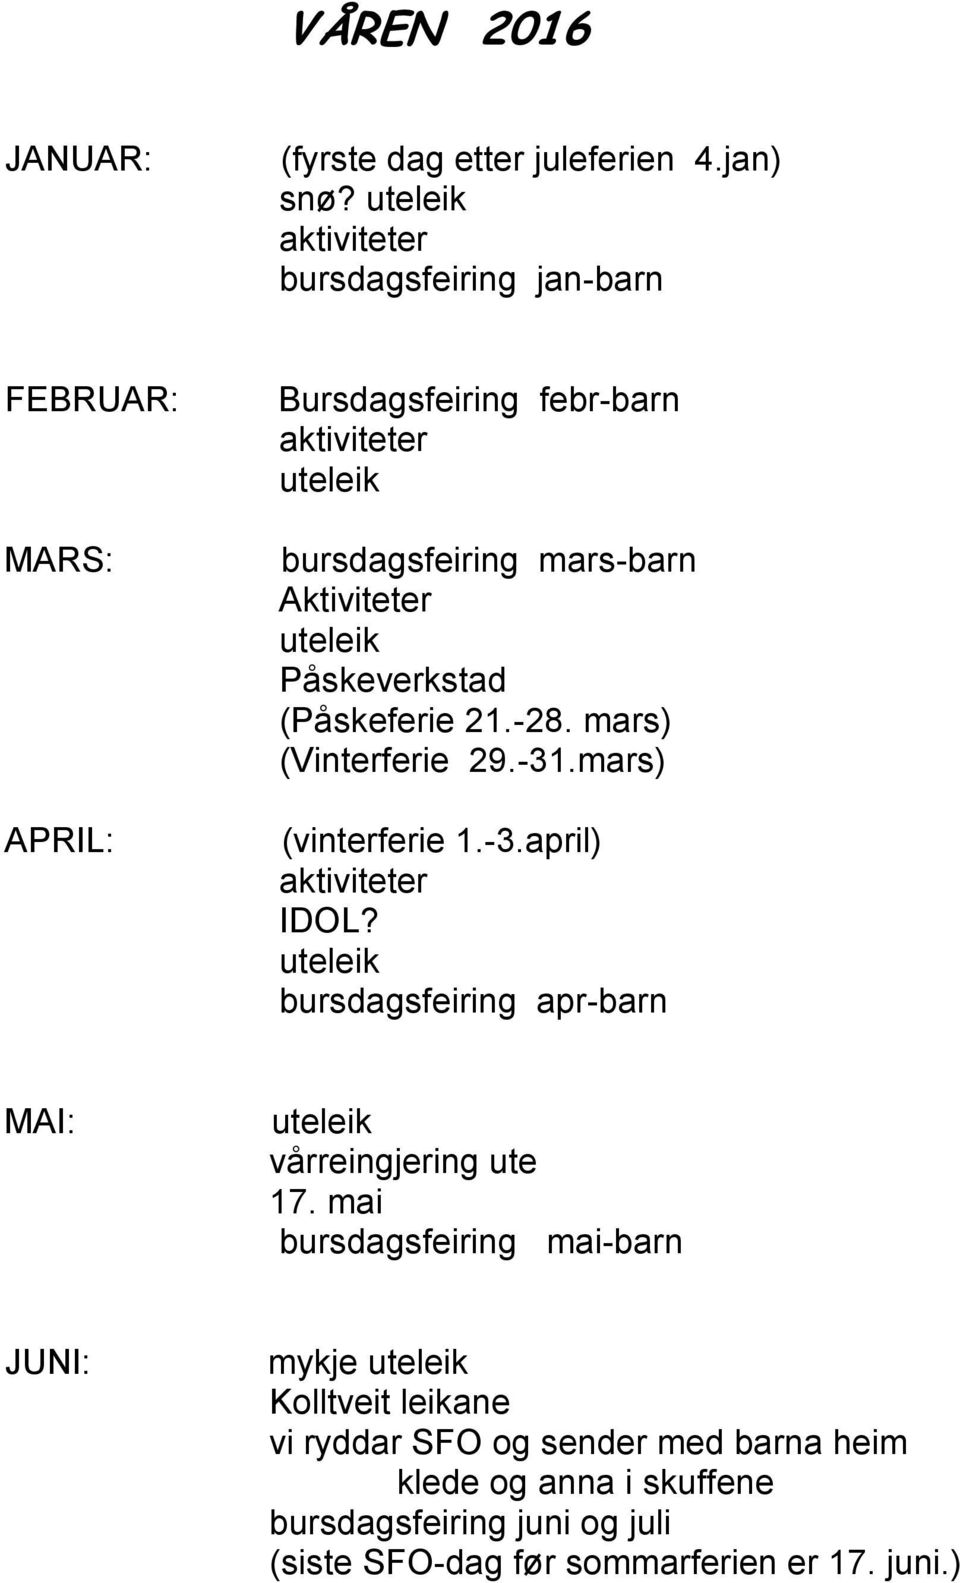 Påskeverkstad (Påskeferie 21.-28. mars) (Vinterferie 29.-31.mars) (vinterferie 1.-3.april) aktiviteter IDOL?